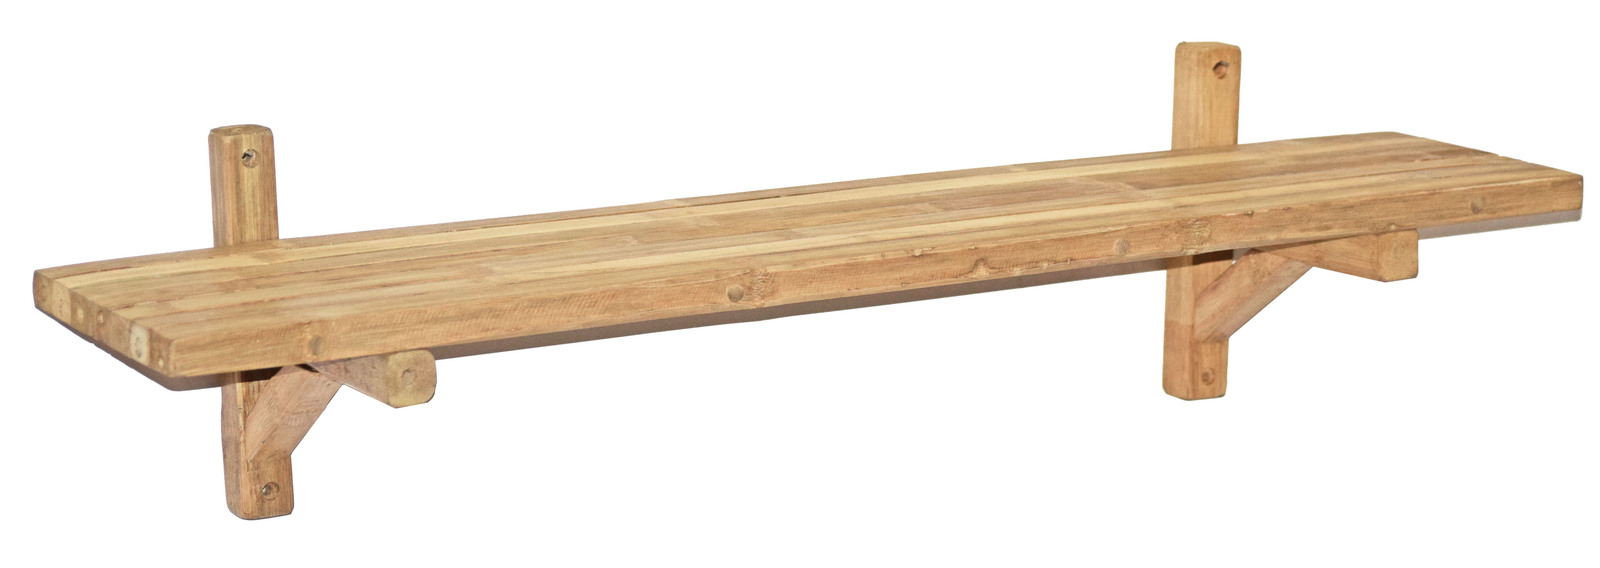 Bamboo Tiki Wall Shelf 36 Inch Single  - $59.00